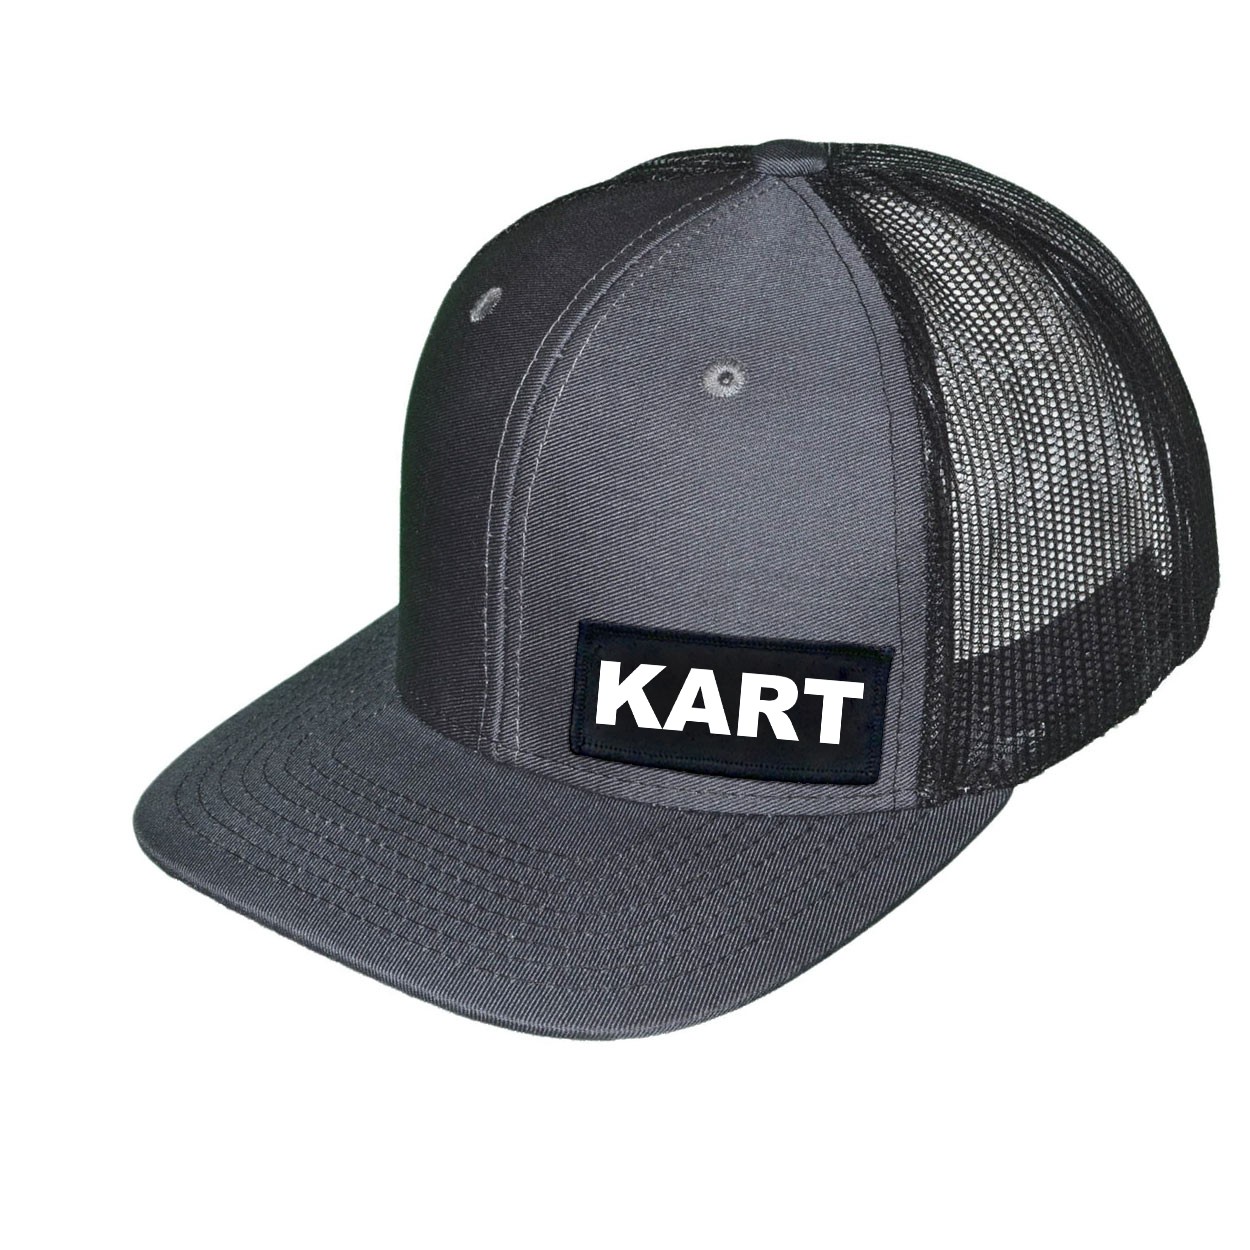 Kart Brand Logo Night Out Woven Patch Snapback Trucker Hat Dark Gray/Black